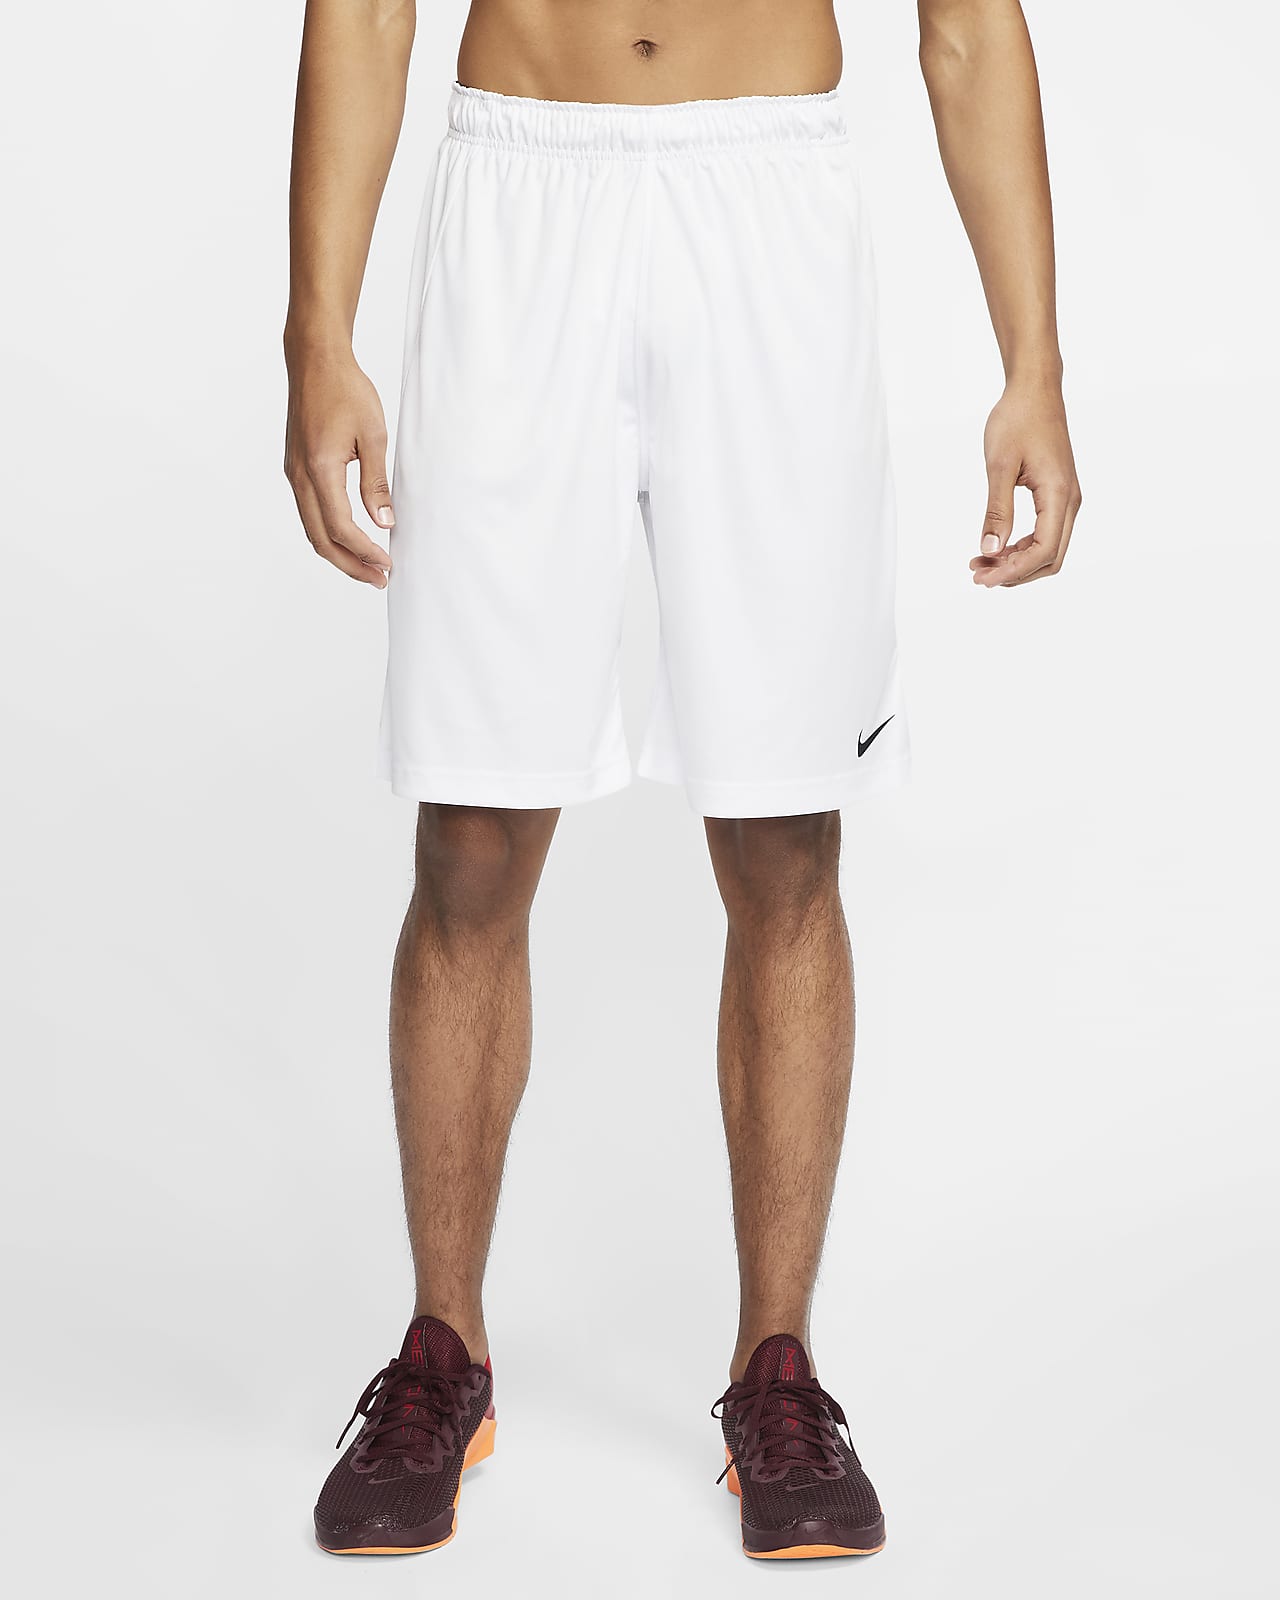 Nike Dri-FIT Men's Football Shorts.